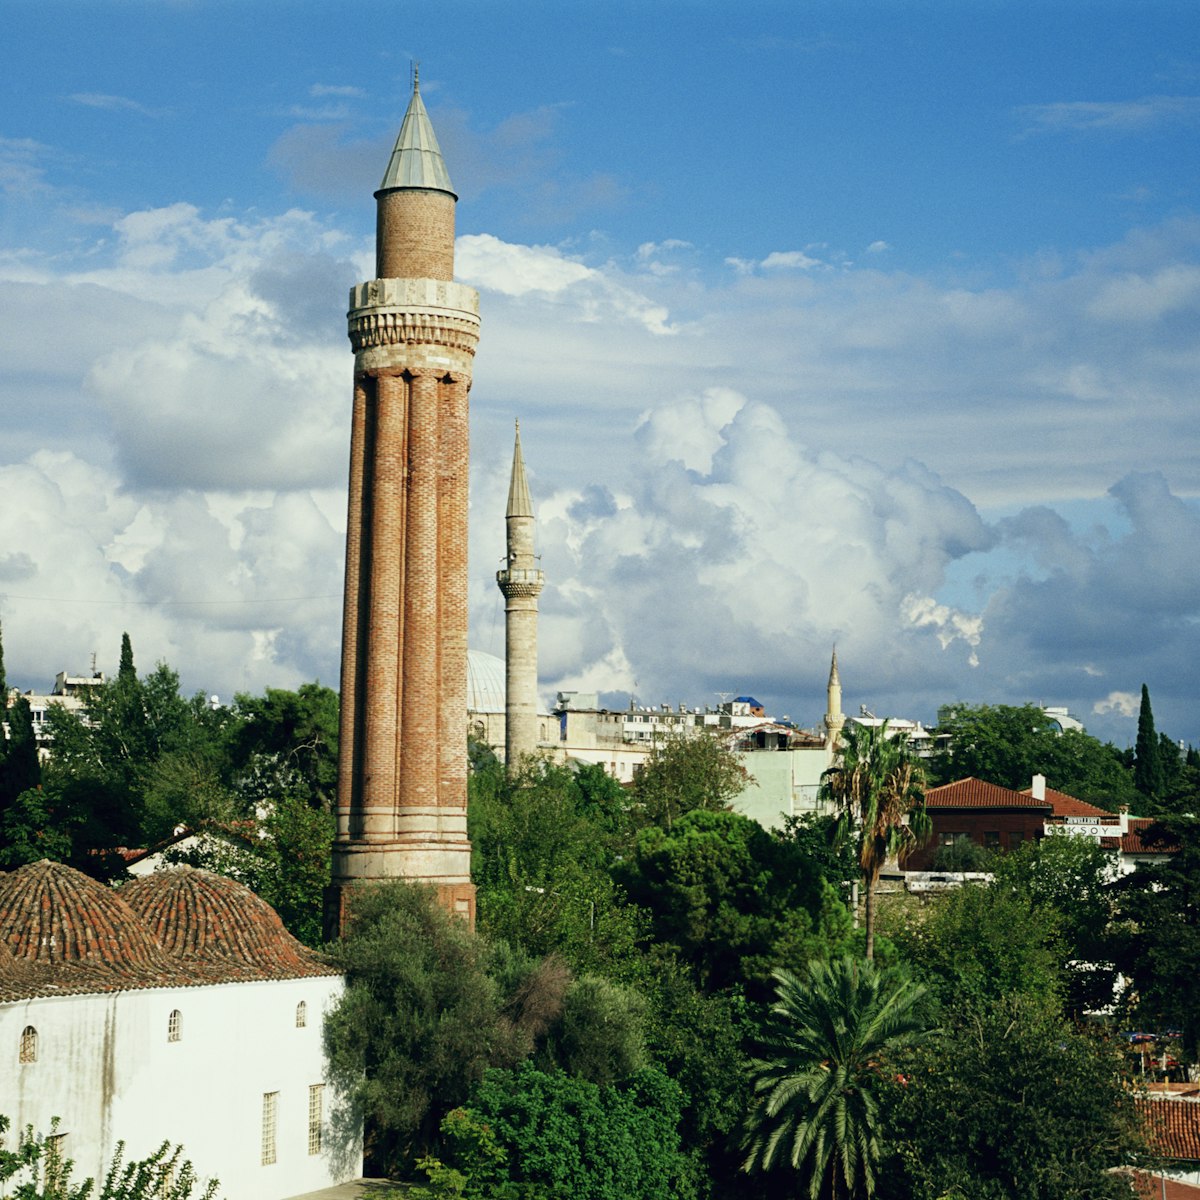 Turkey, Antalya, Yivli Minare mosque